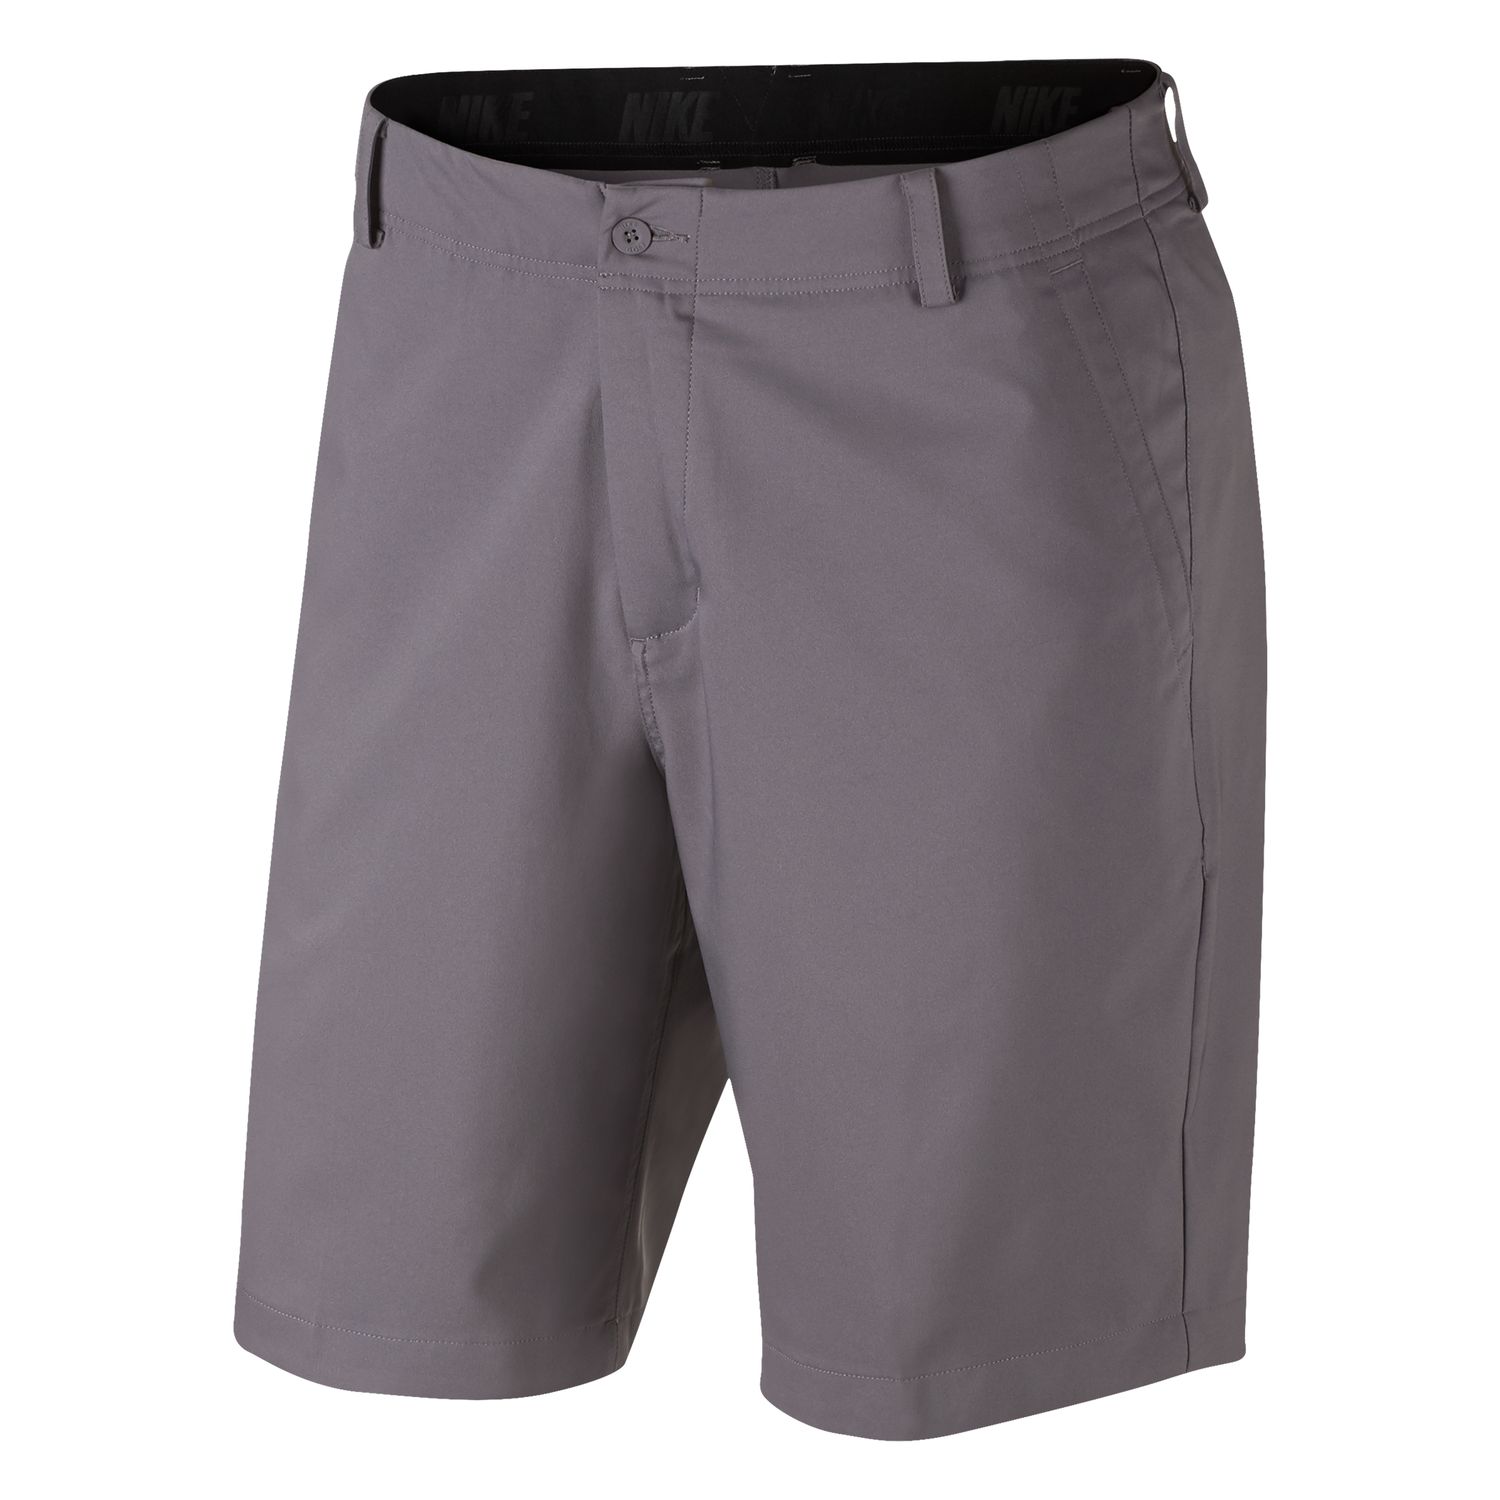 men's dri fit golf shorts